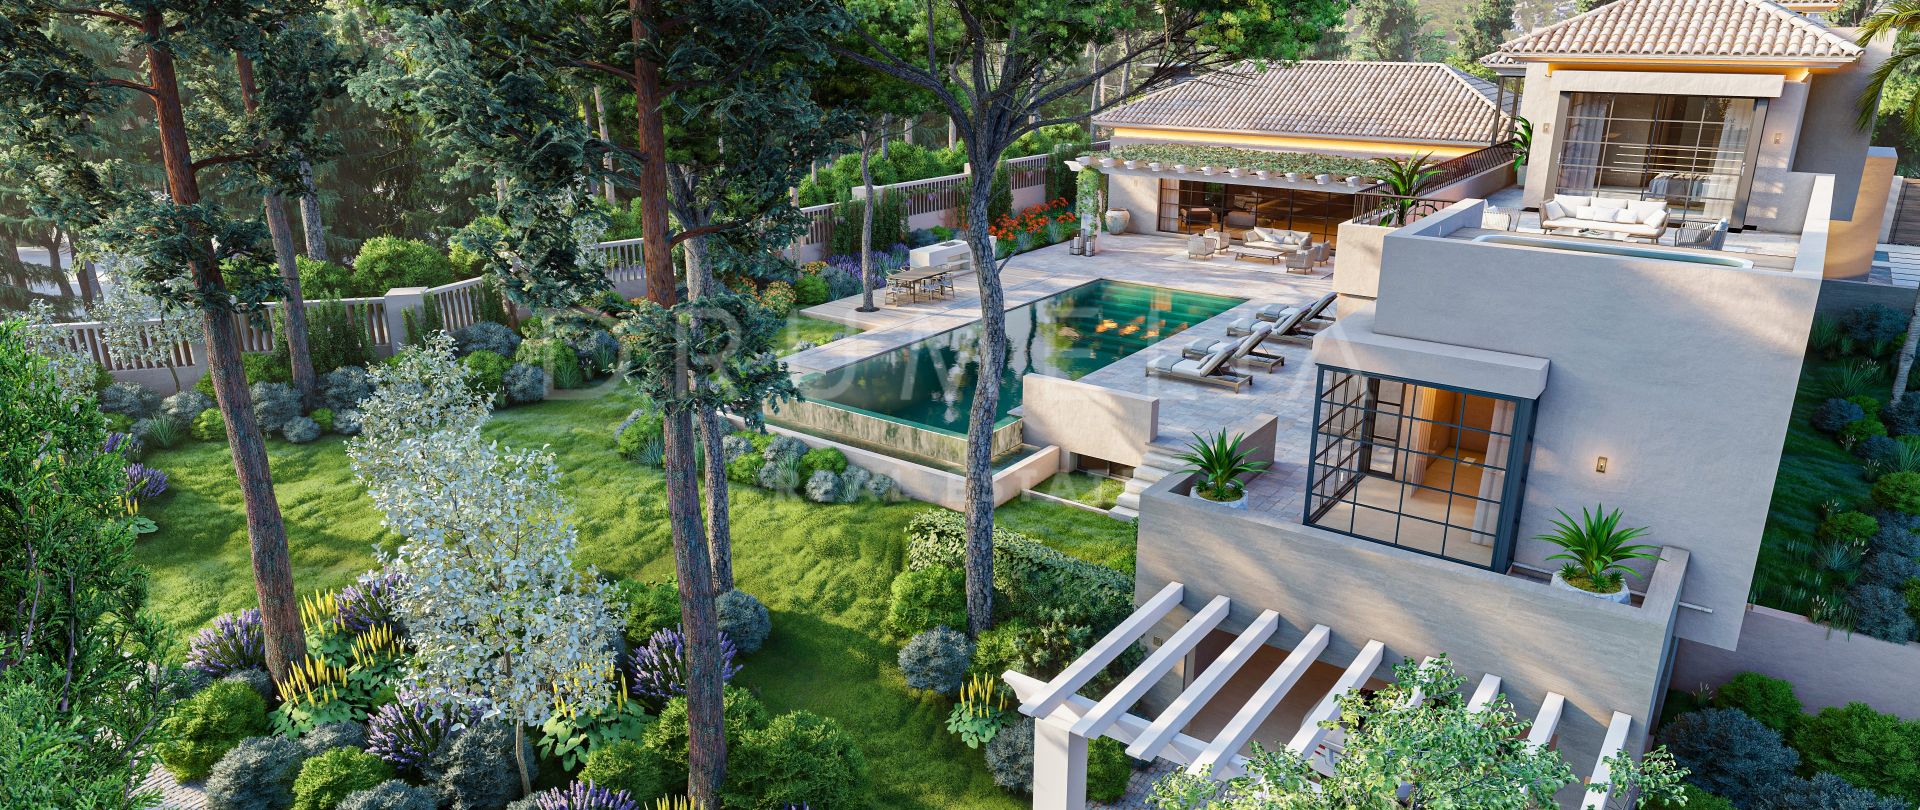 La Carolina 96 - New elegant modern Mediterranean luxury villa in La Carolina, Marbella Golden Mile